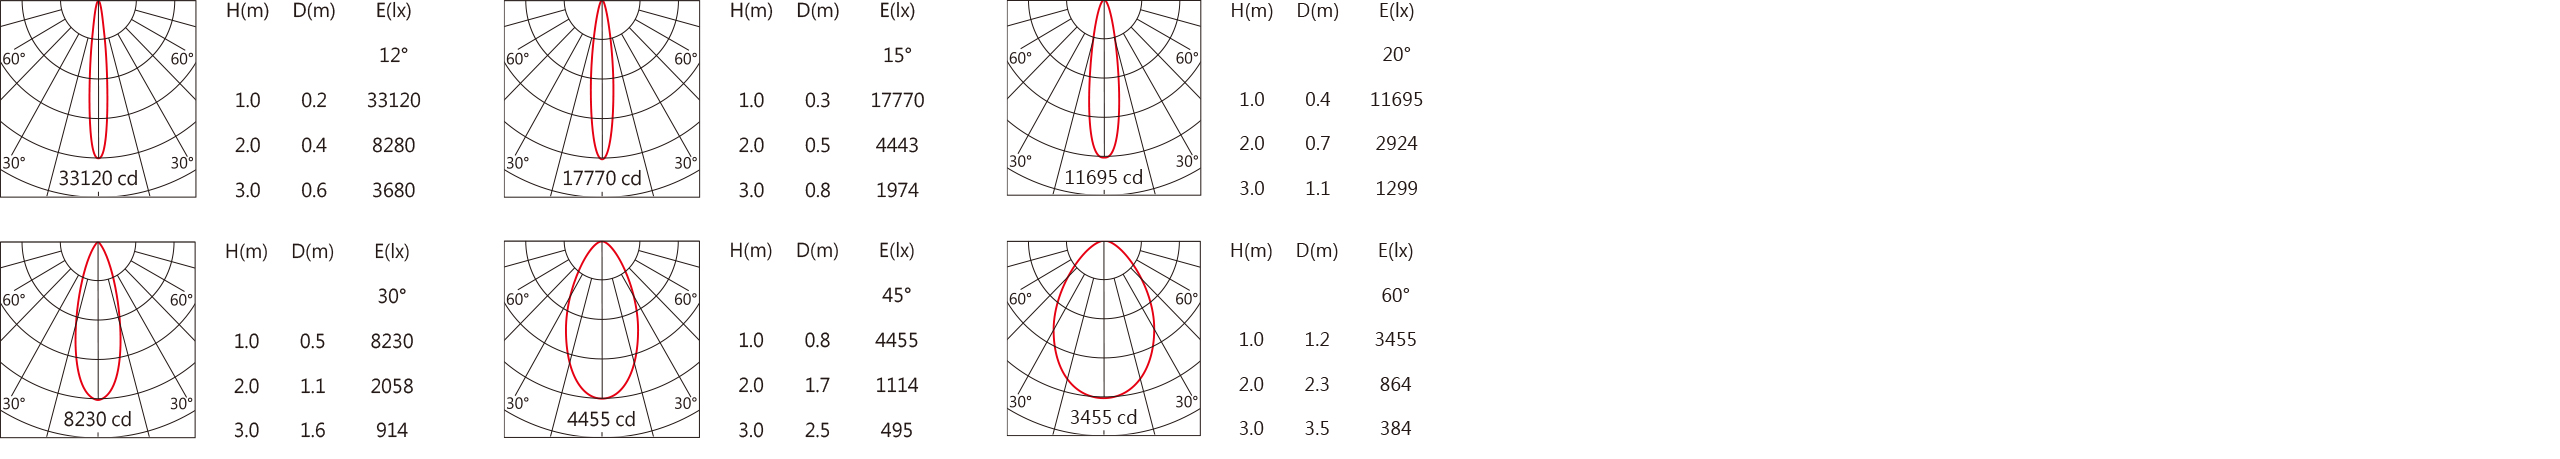 DW-3170C Light distribution.jpg